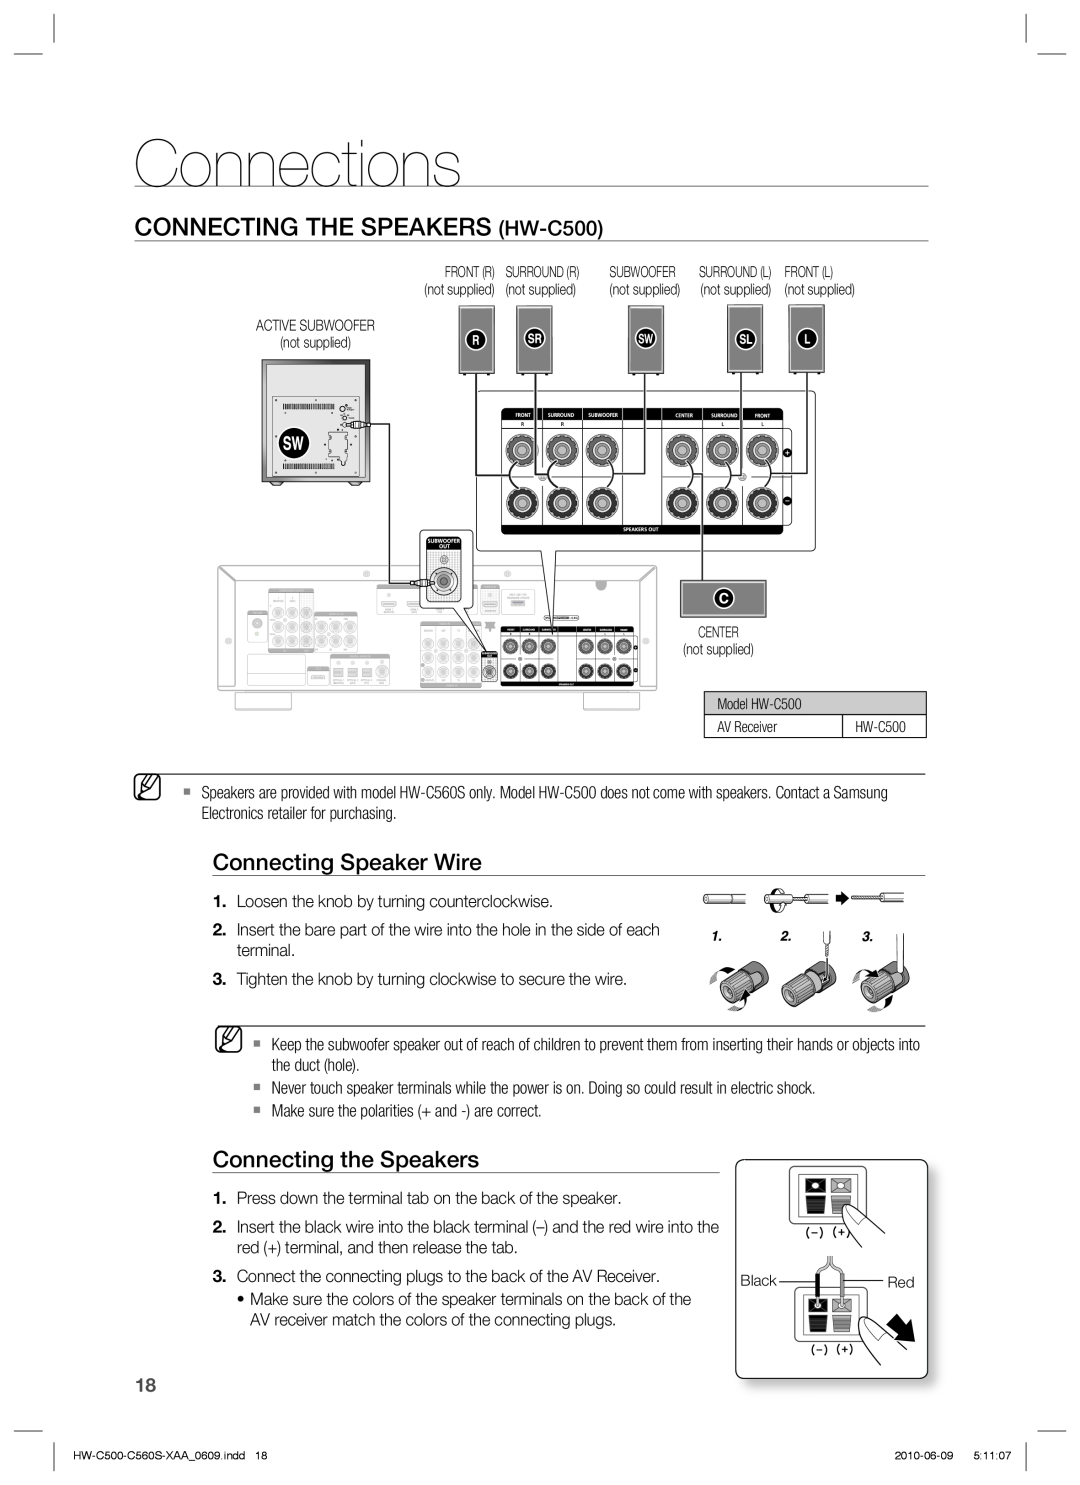 Samsung HW-C560S CONNECTING THE SPEAKERS HW-C500, Connecting Speaker Wire, Connecting the Speakers, Connections 